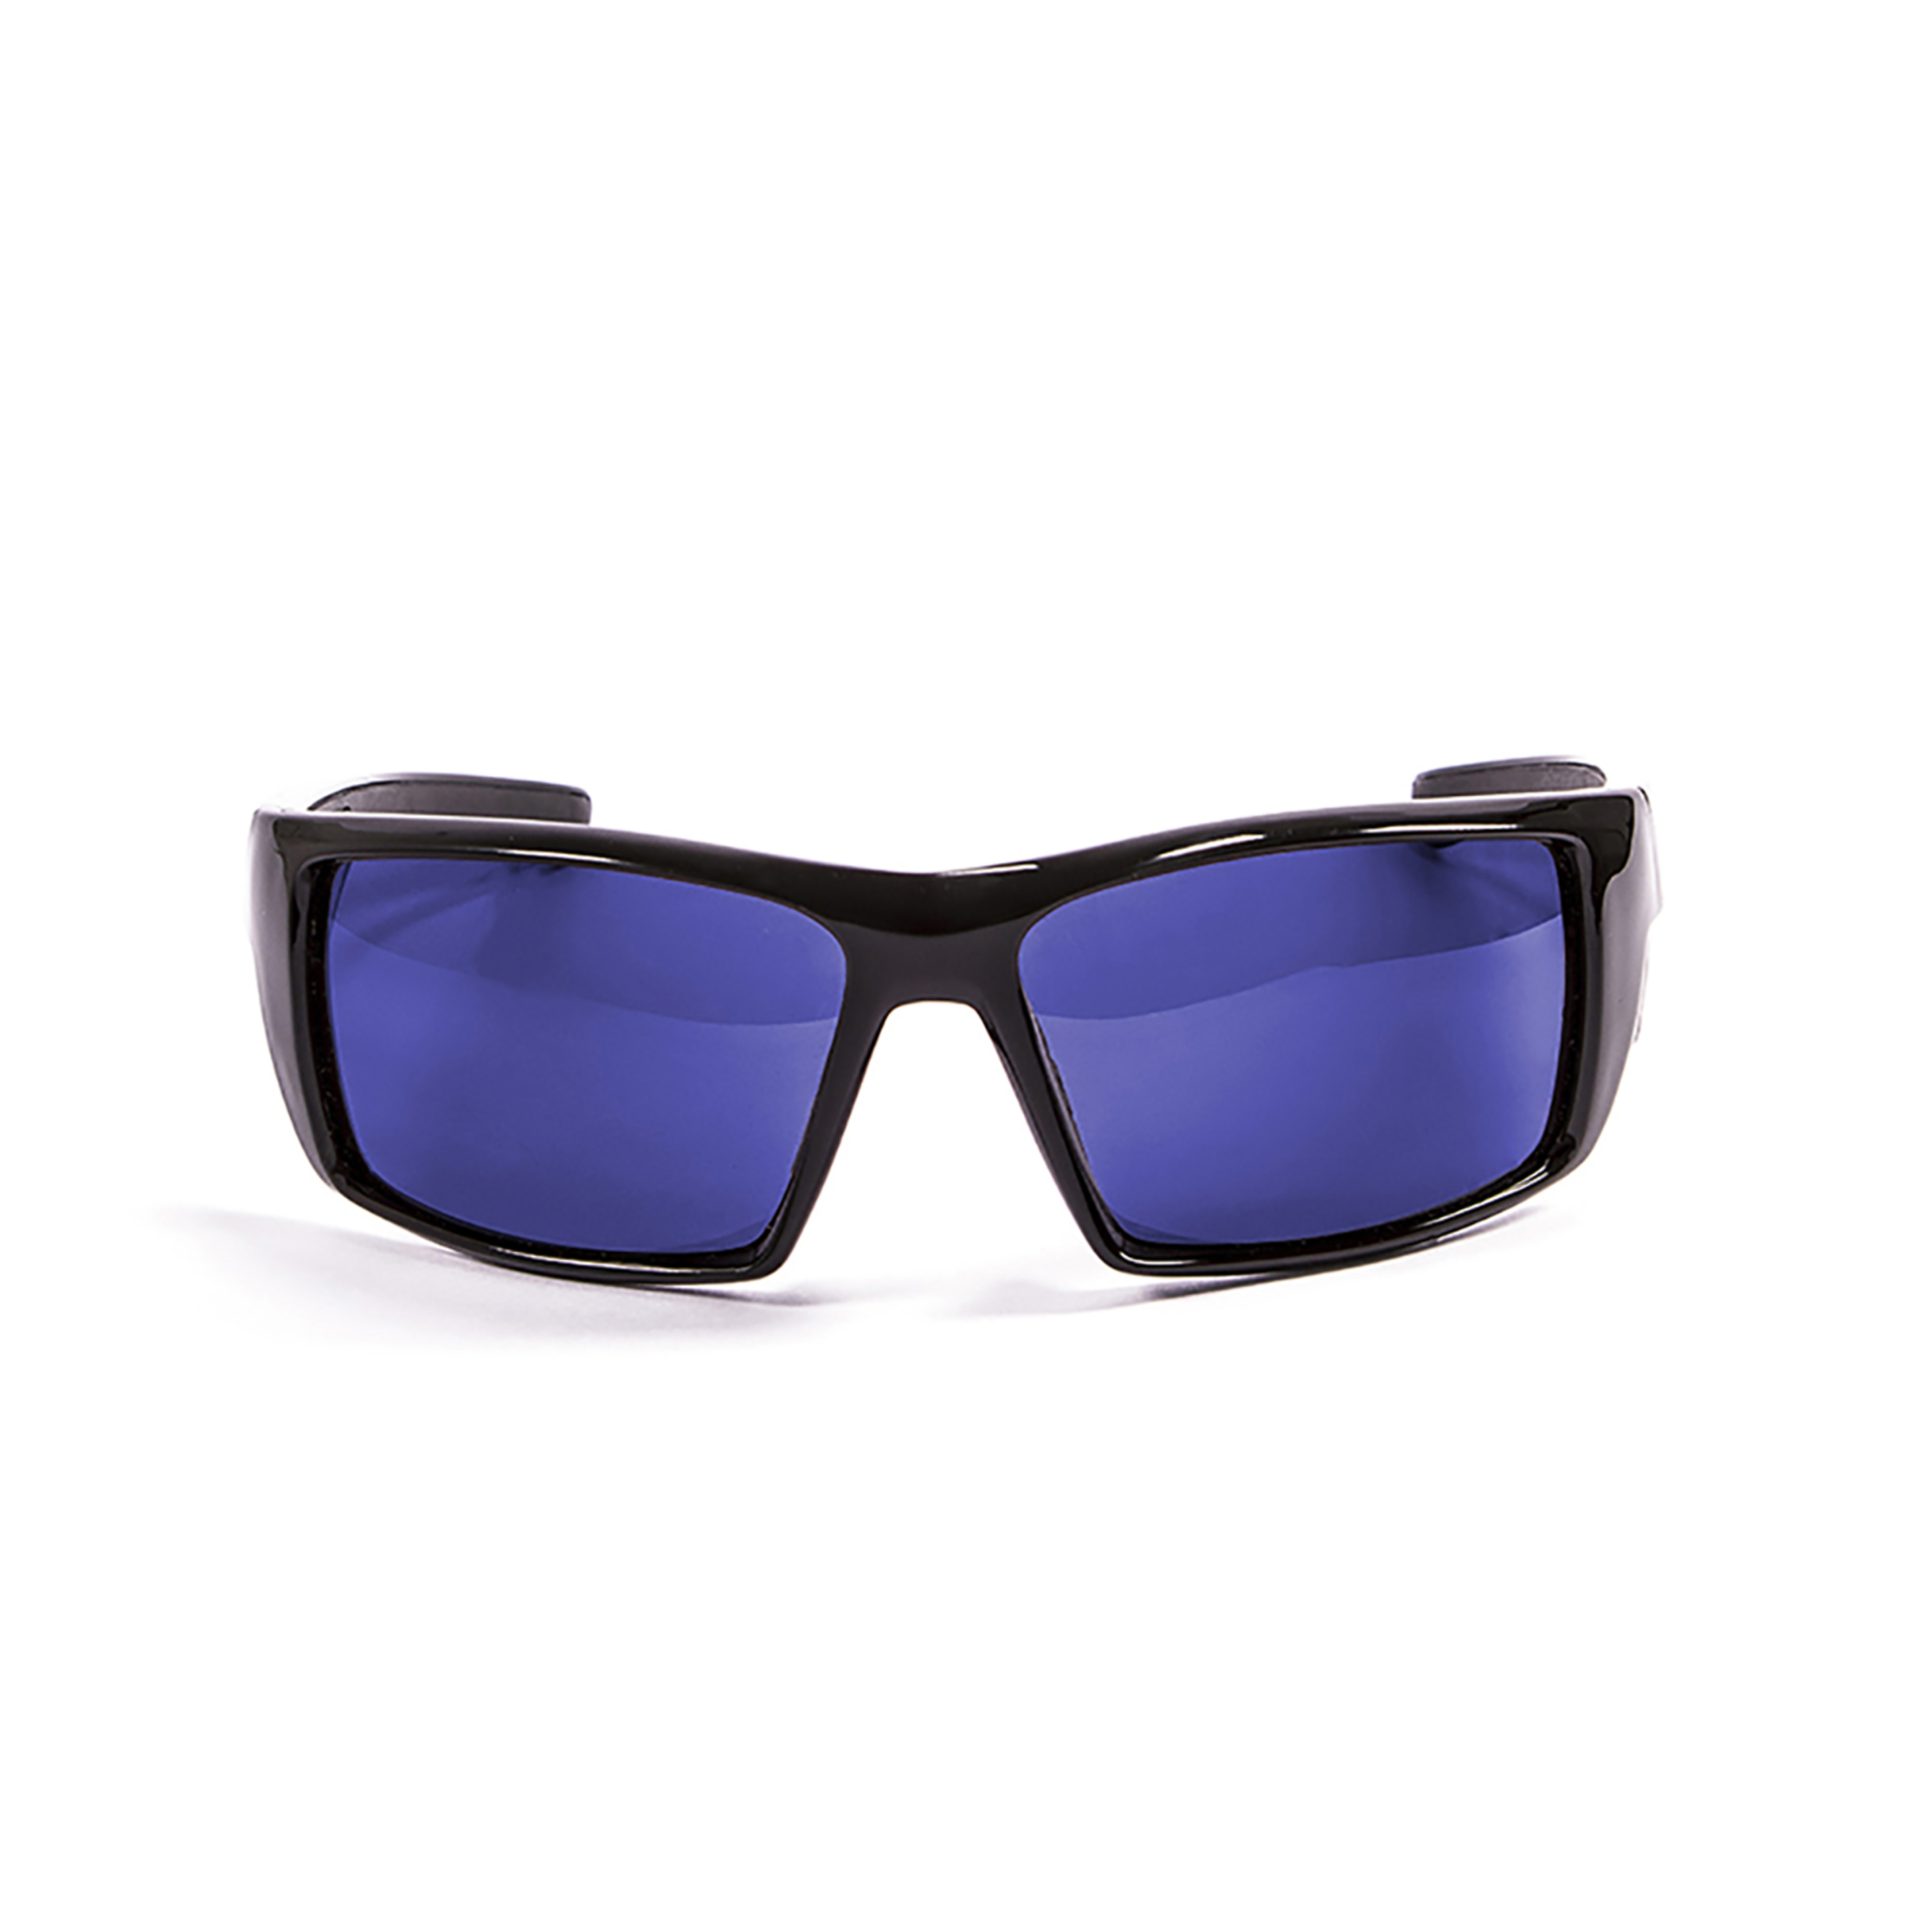 Gafas De Sol Técnicas Para La Práctica De Deportes De Agua Aruba Ocean Sunglasses - Negro/Azul  MKP